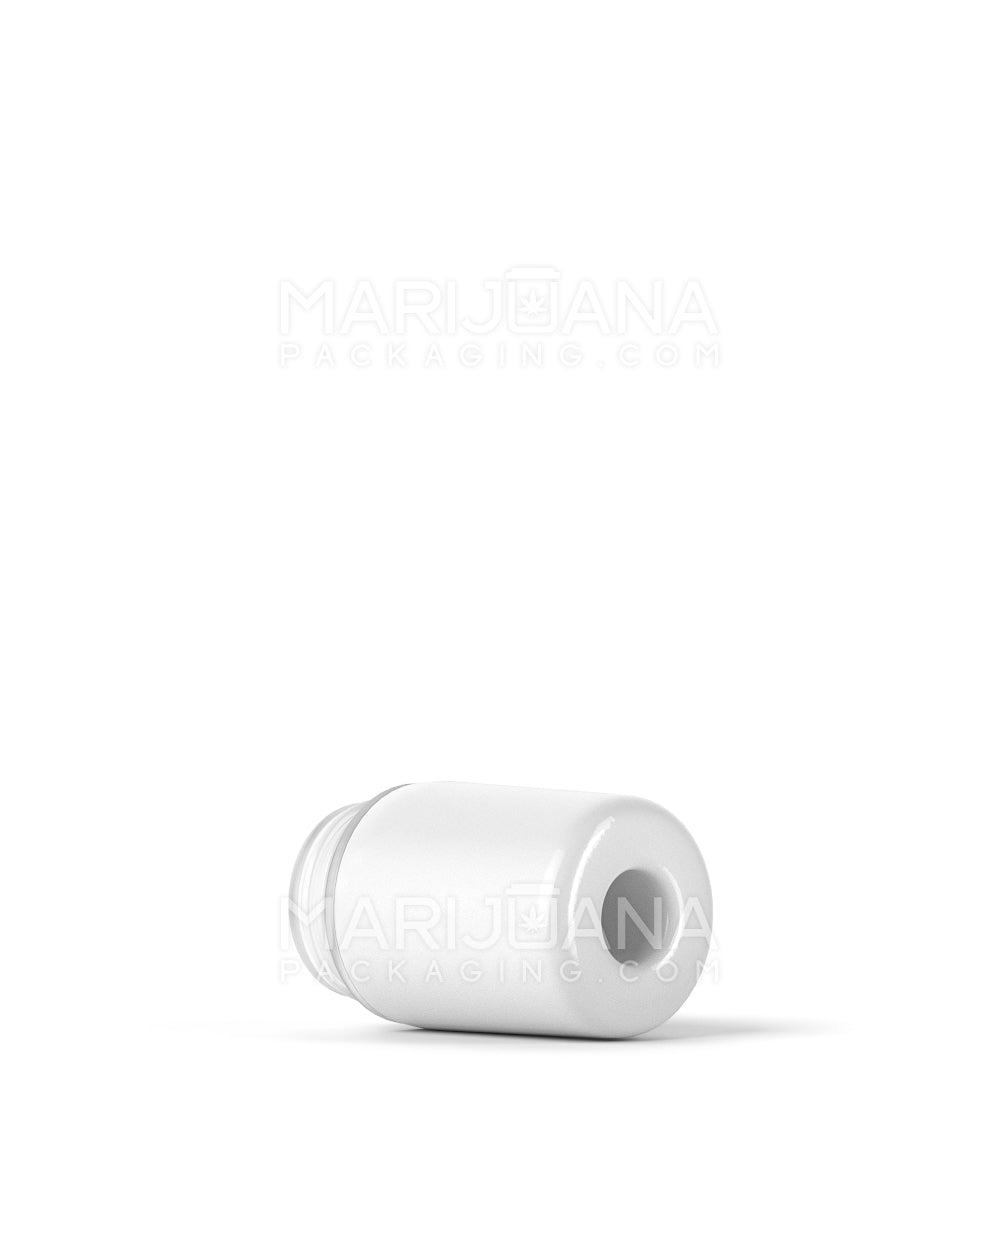 AVD | Barrel Vape Mouthpiece for Glass Cartridges | White Ceramic - Eazy Press - 600 Count - 5